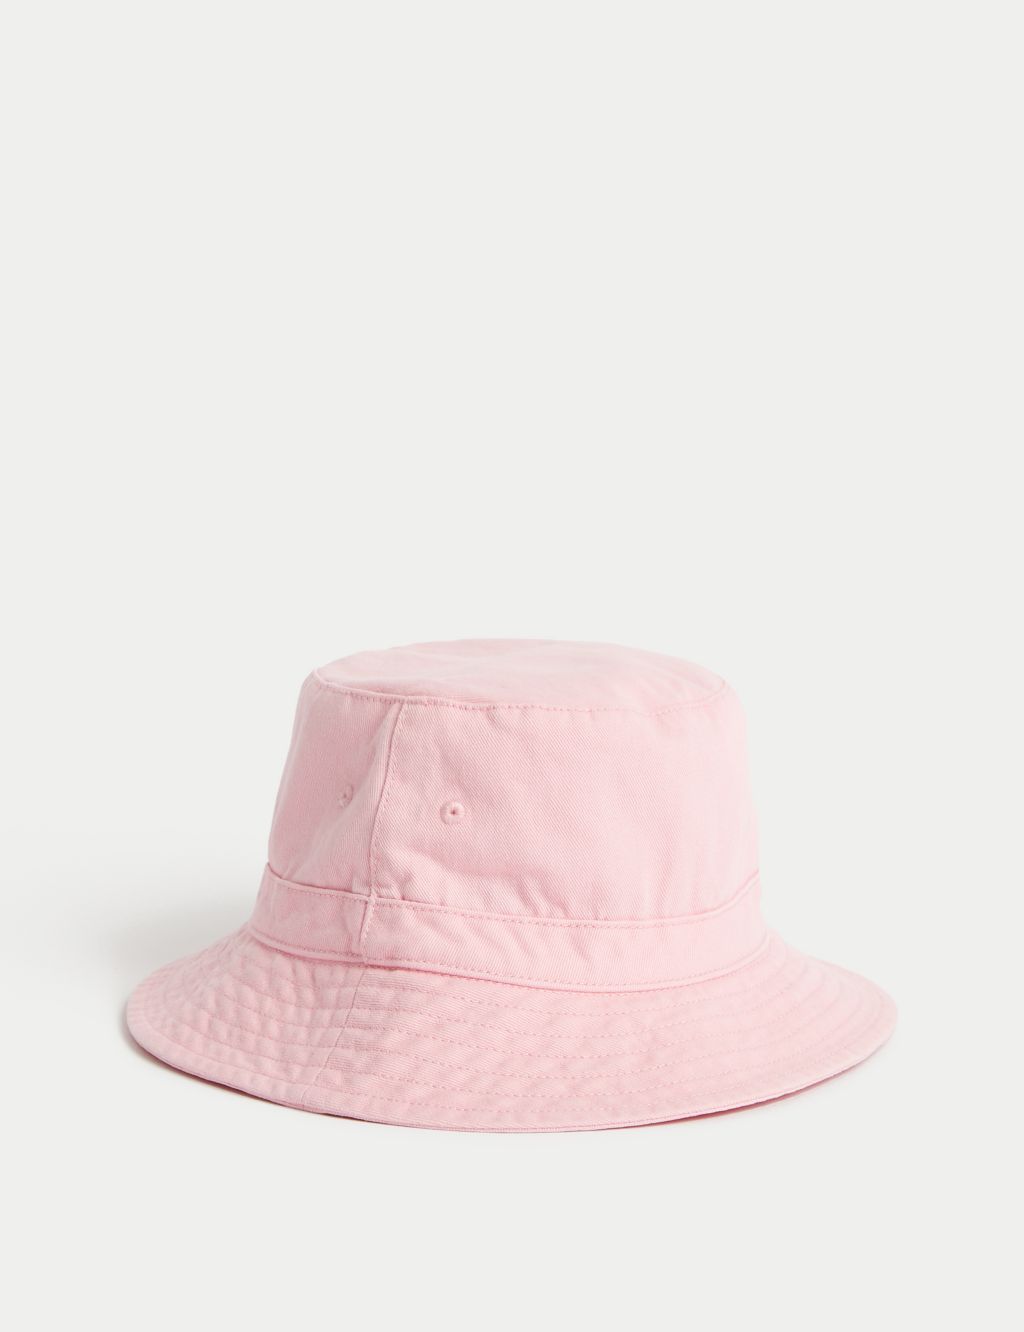 Baby - Pink Cotton Sun Hat - Size: 18M/2T (1-2Y) - H&M